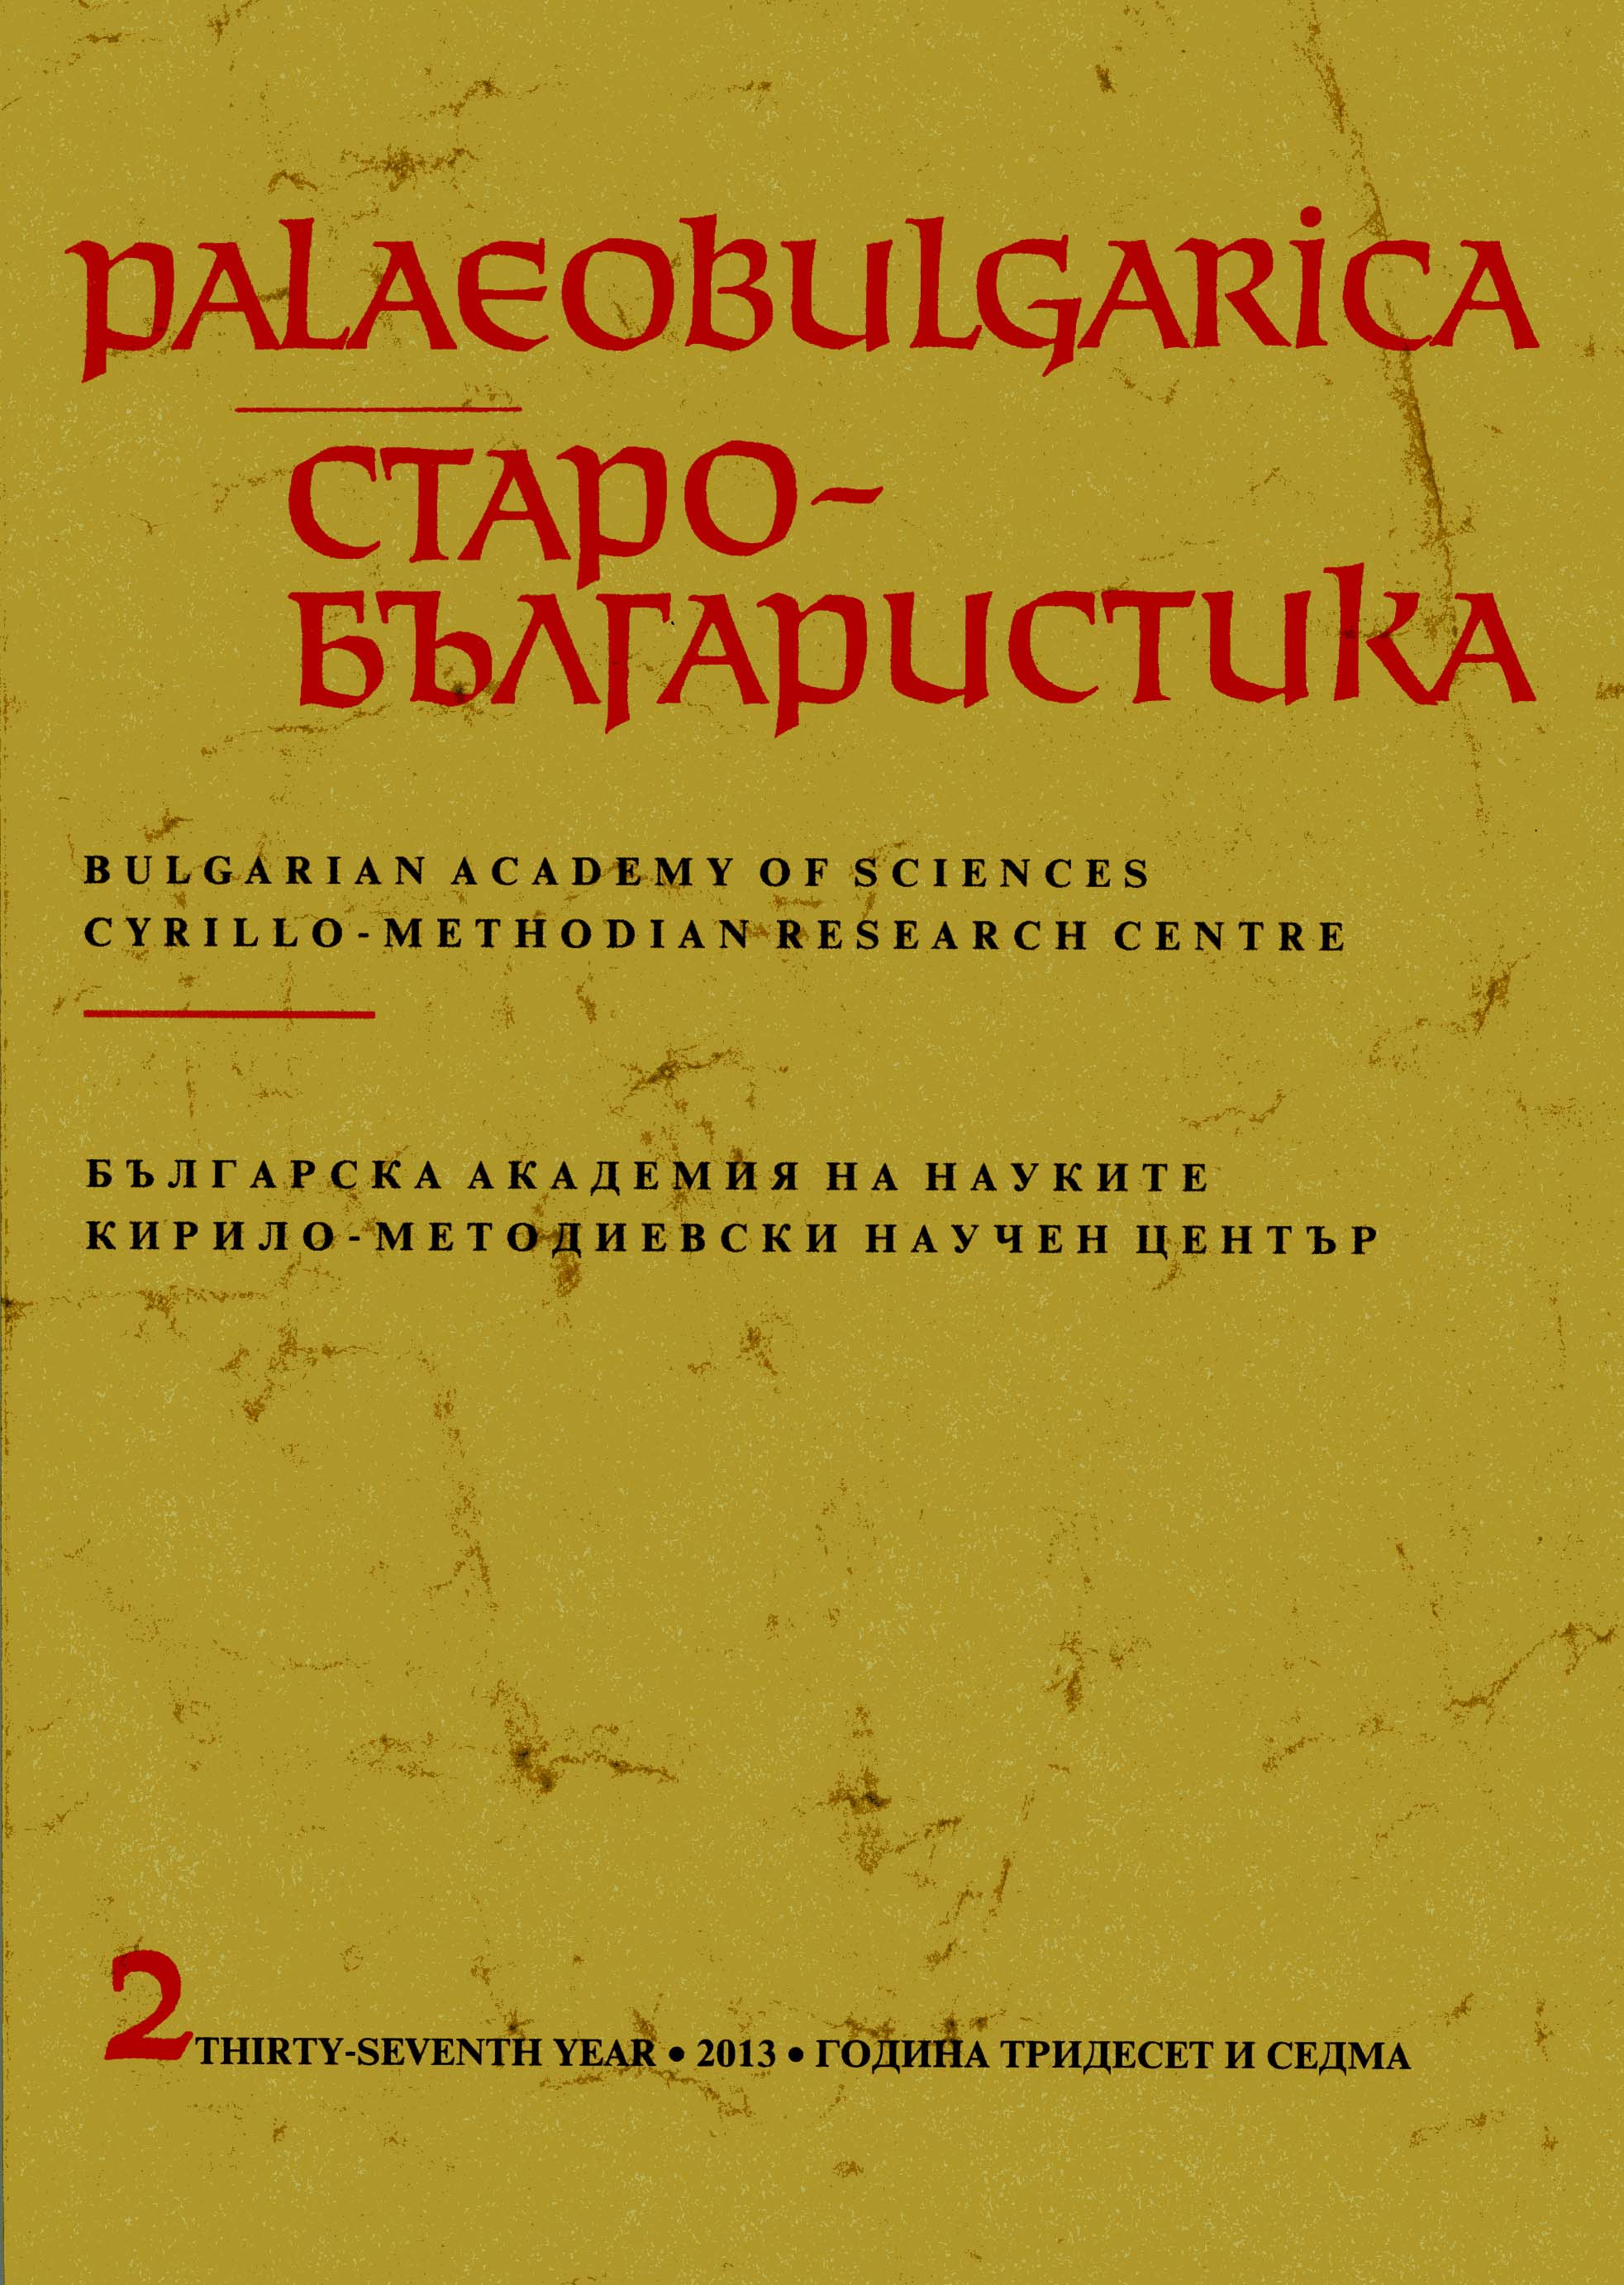 About Four Stichera of the 12th Century Old Church Slavonic Menaion Sticherarion Cover Image